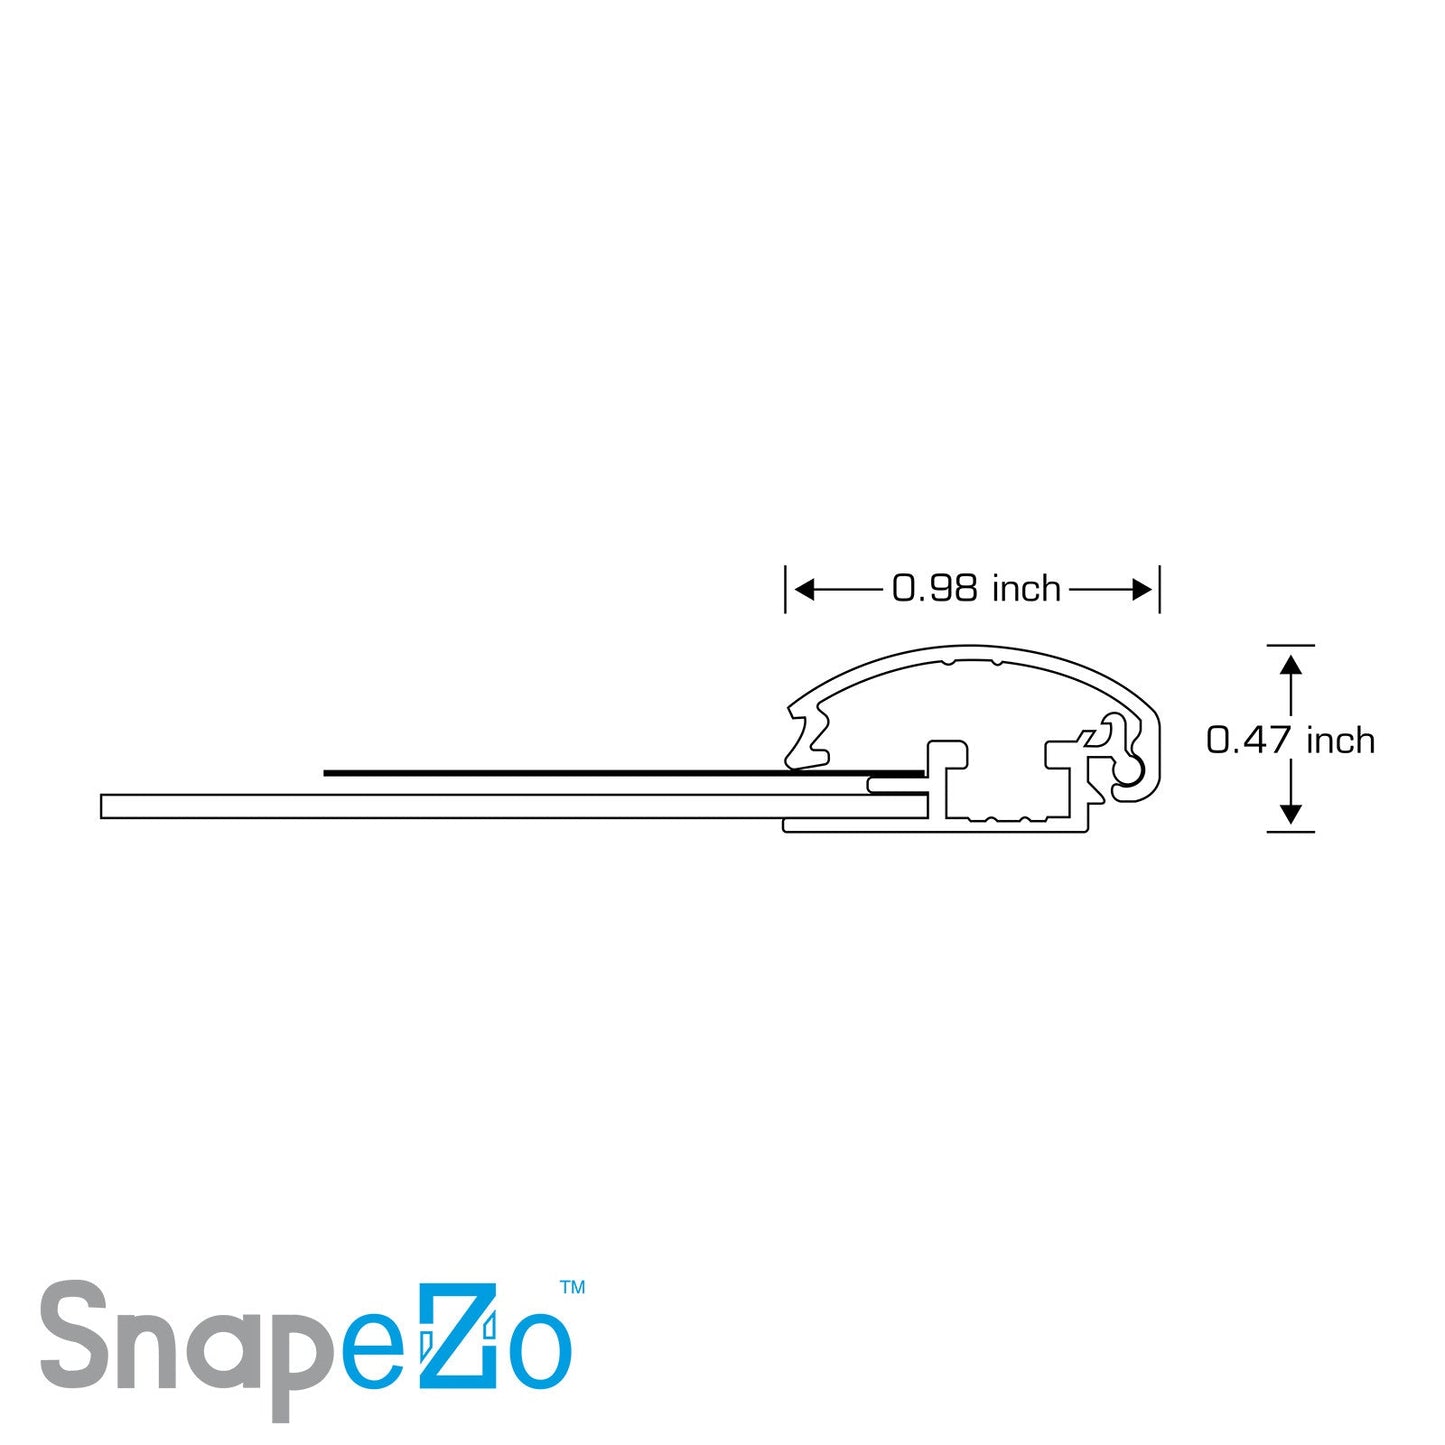 11x14 Black SnapeZo® Snap Frame - 1" Profile